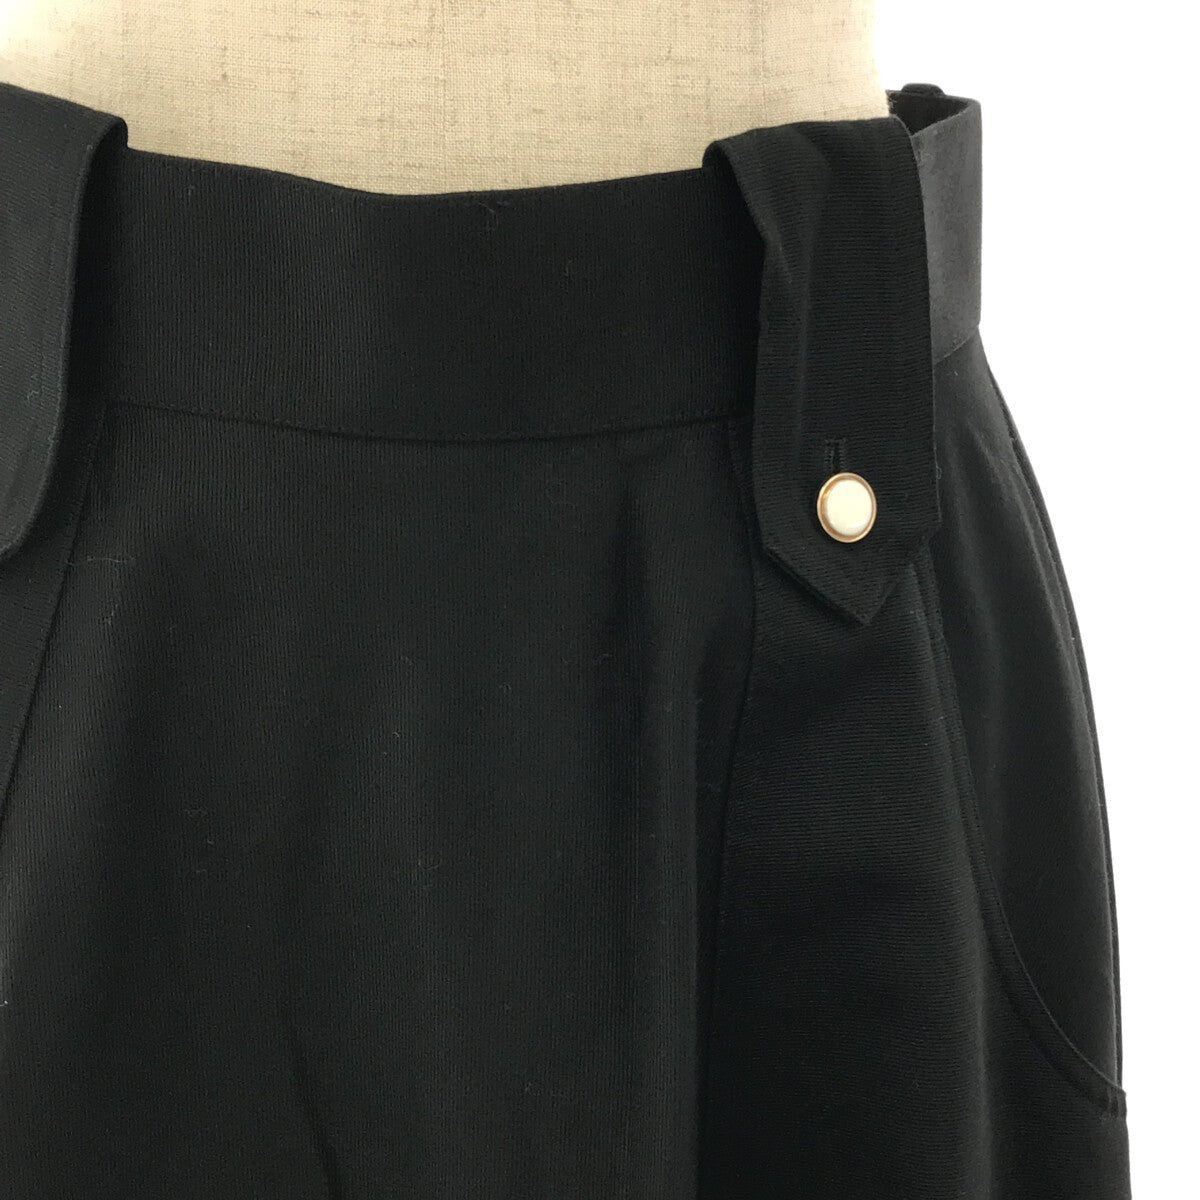 foufou / フーフー | THE DRESS #27 flare dress skirt スカート | 0 